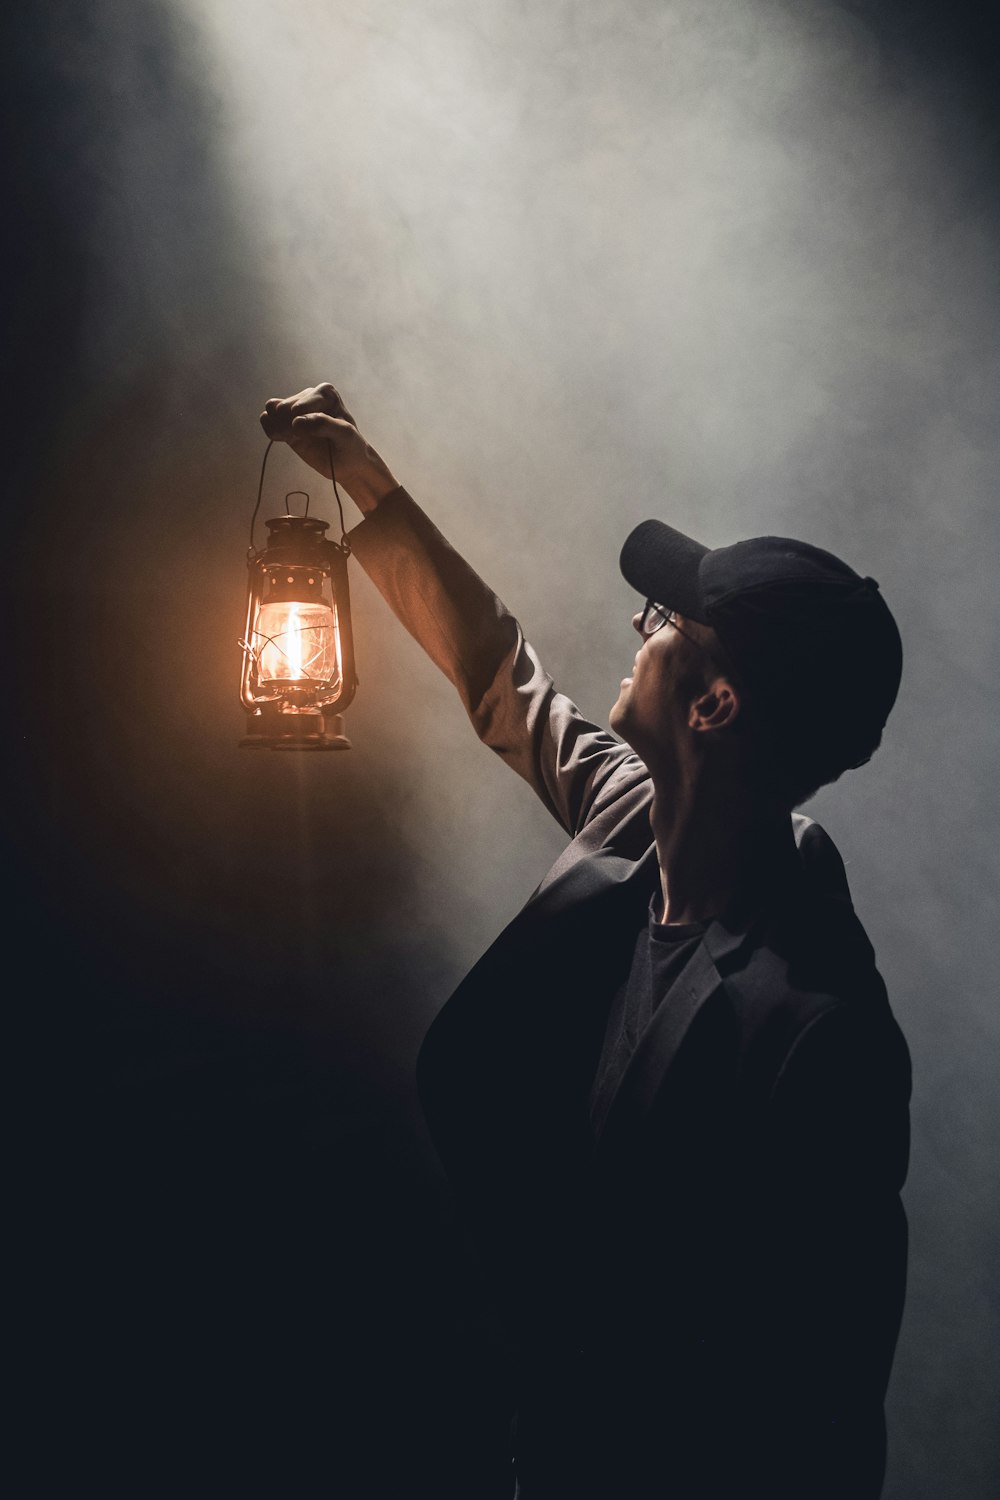 Man holding lighted gas lantern photo – Free Light Image on Unsplash